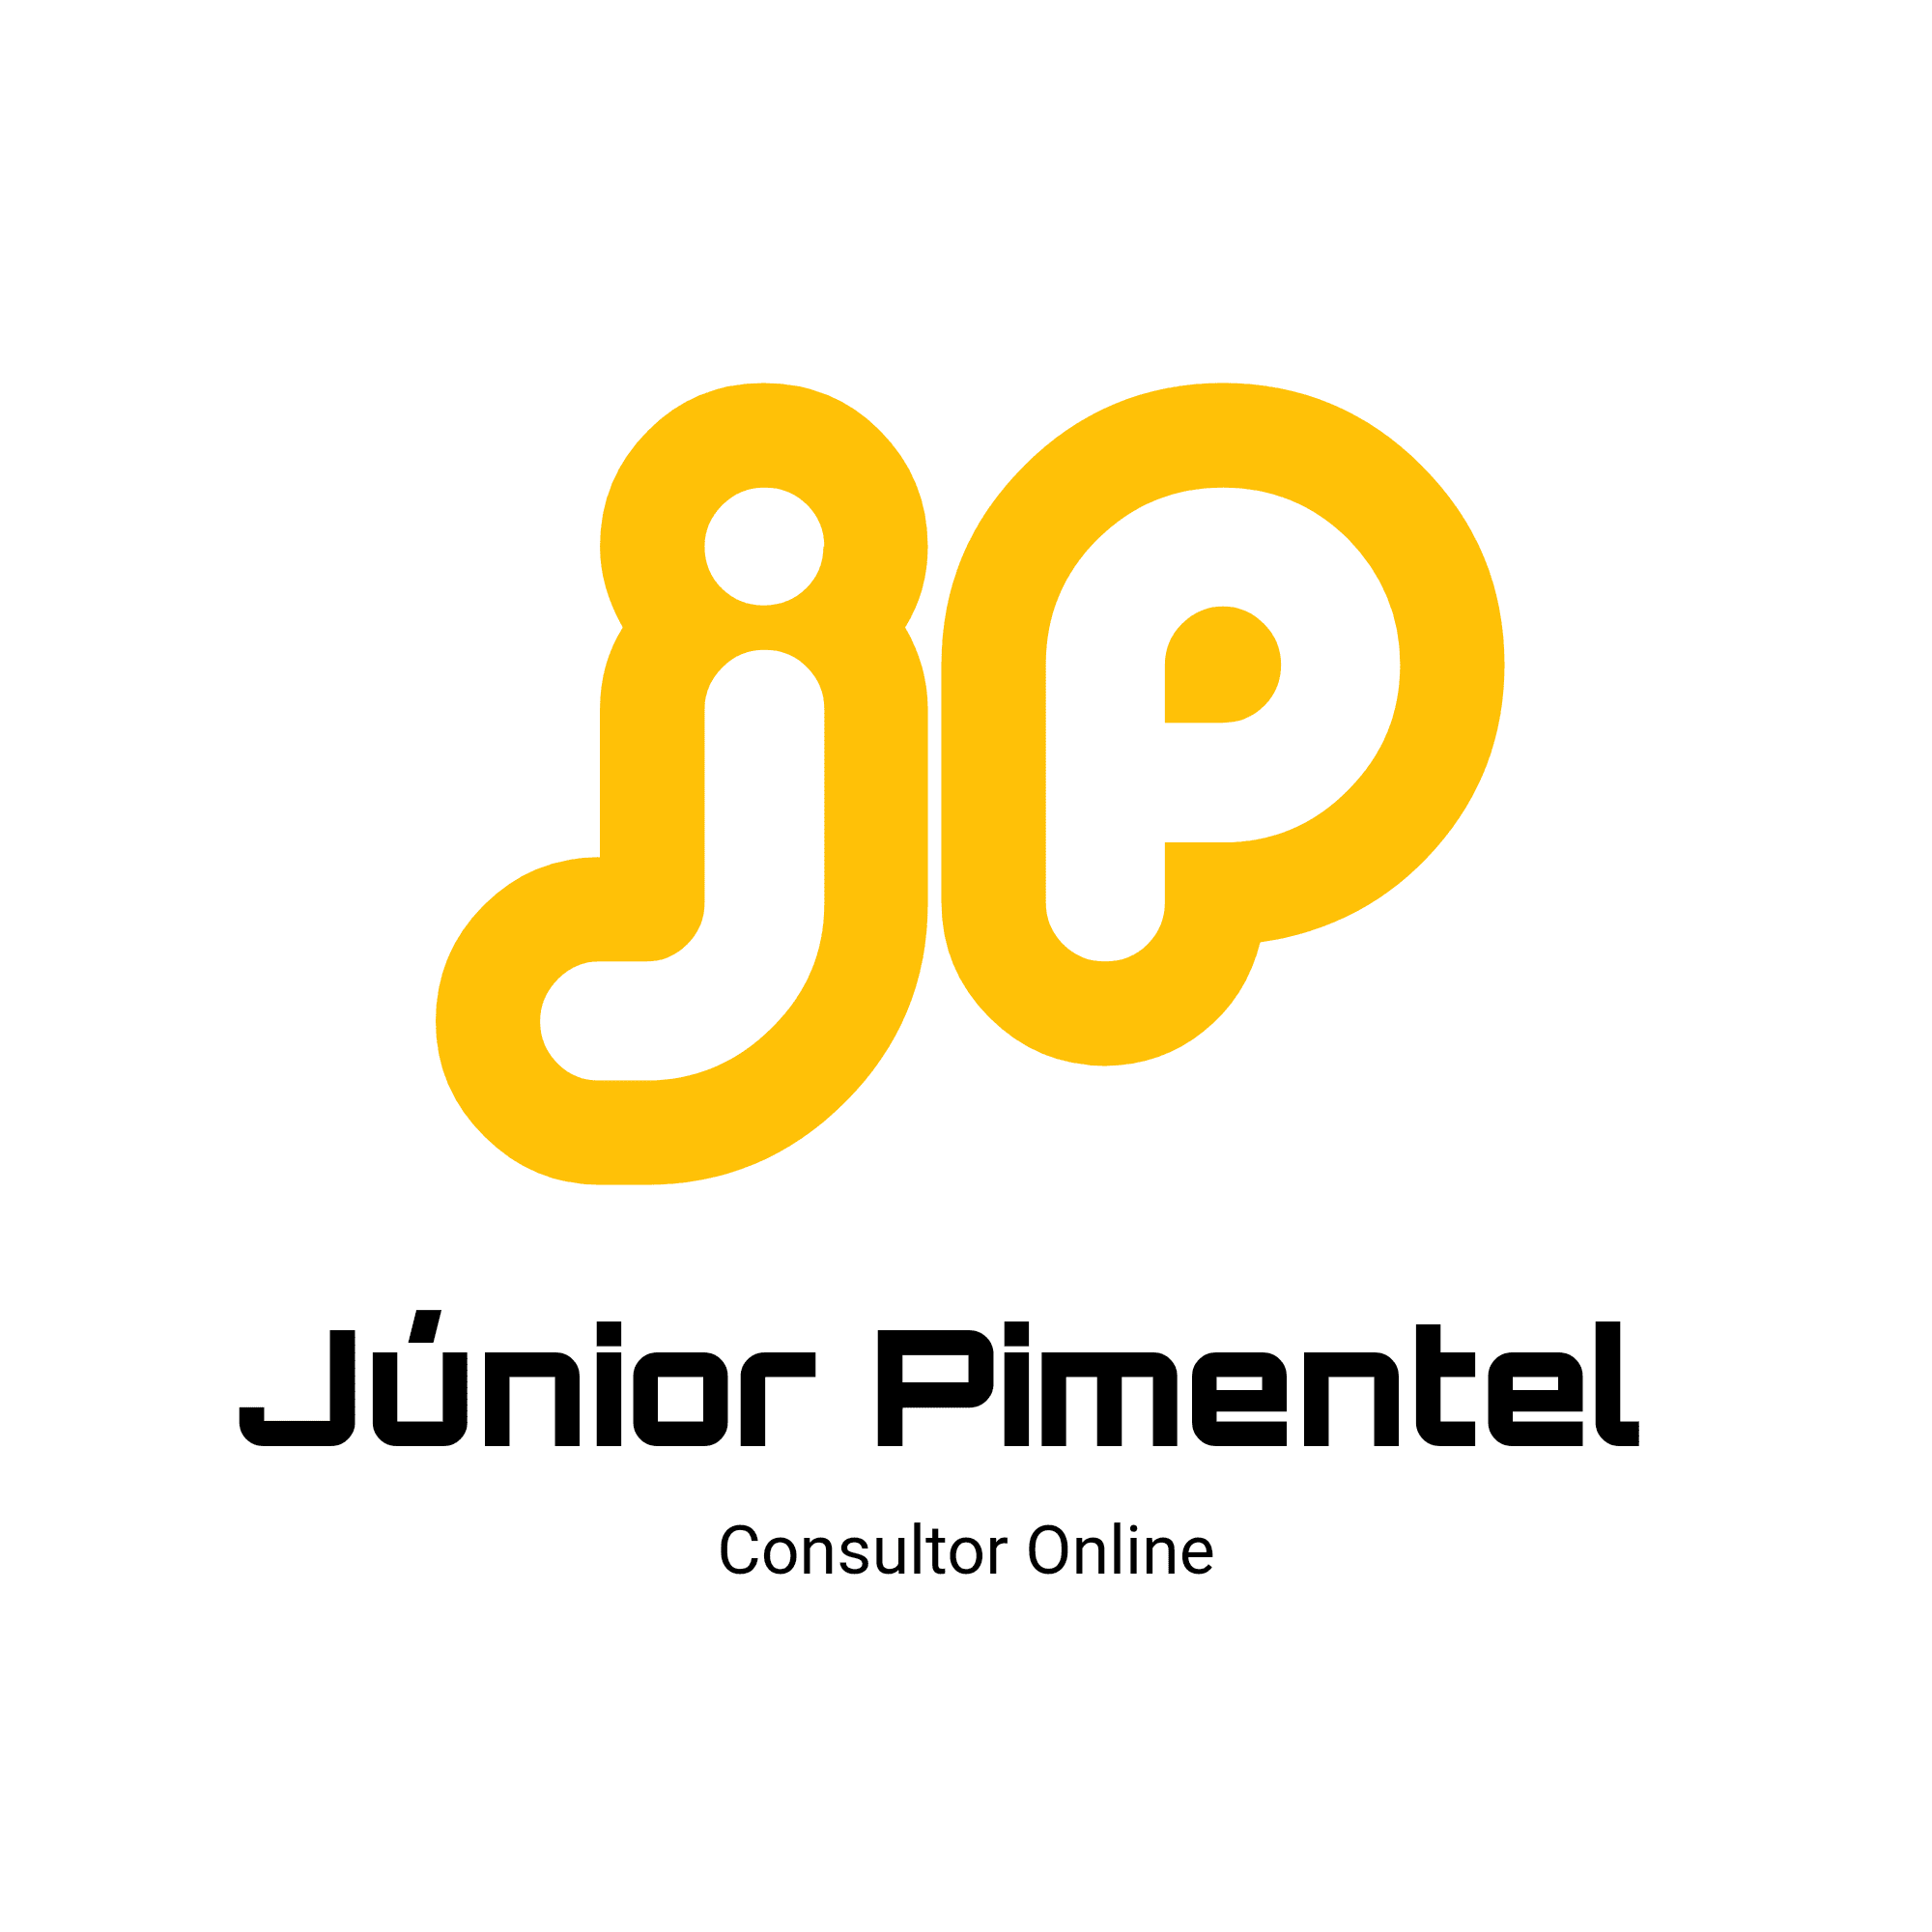 Júnior Pimentel Consultor Online